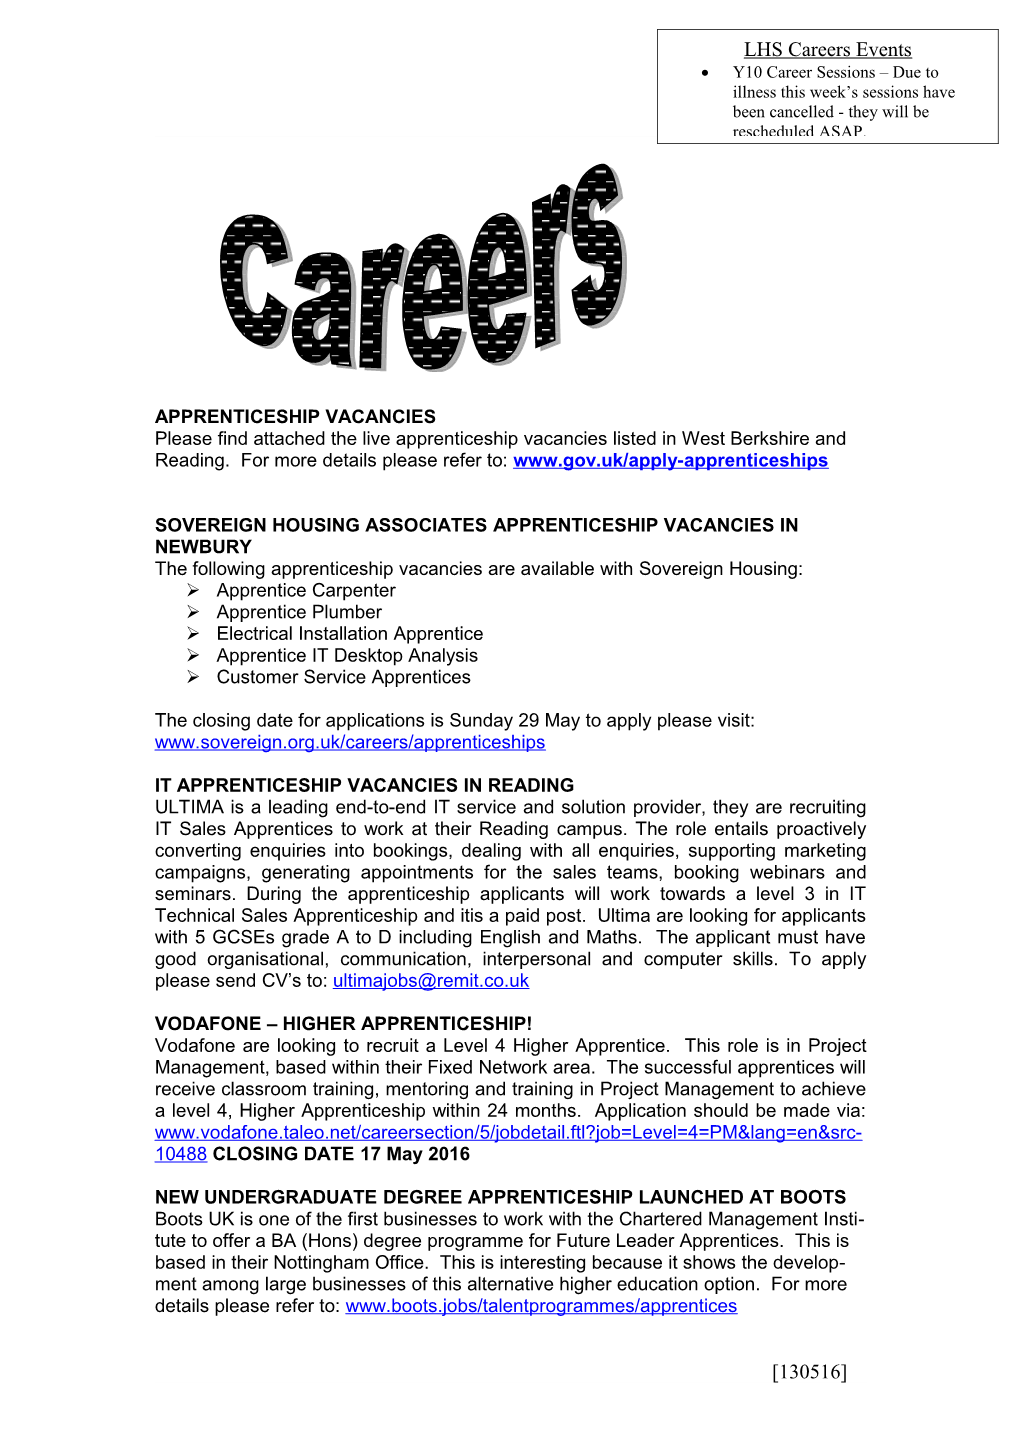 Sovereign Housing Associates Apprenticeship Vacancies in Newbury